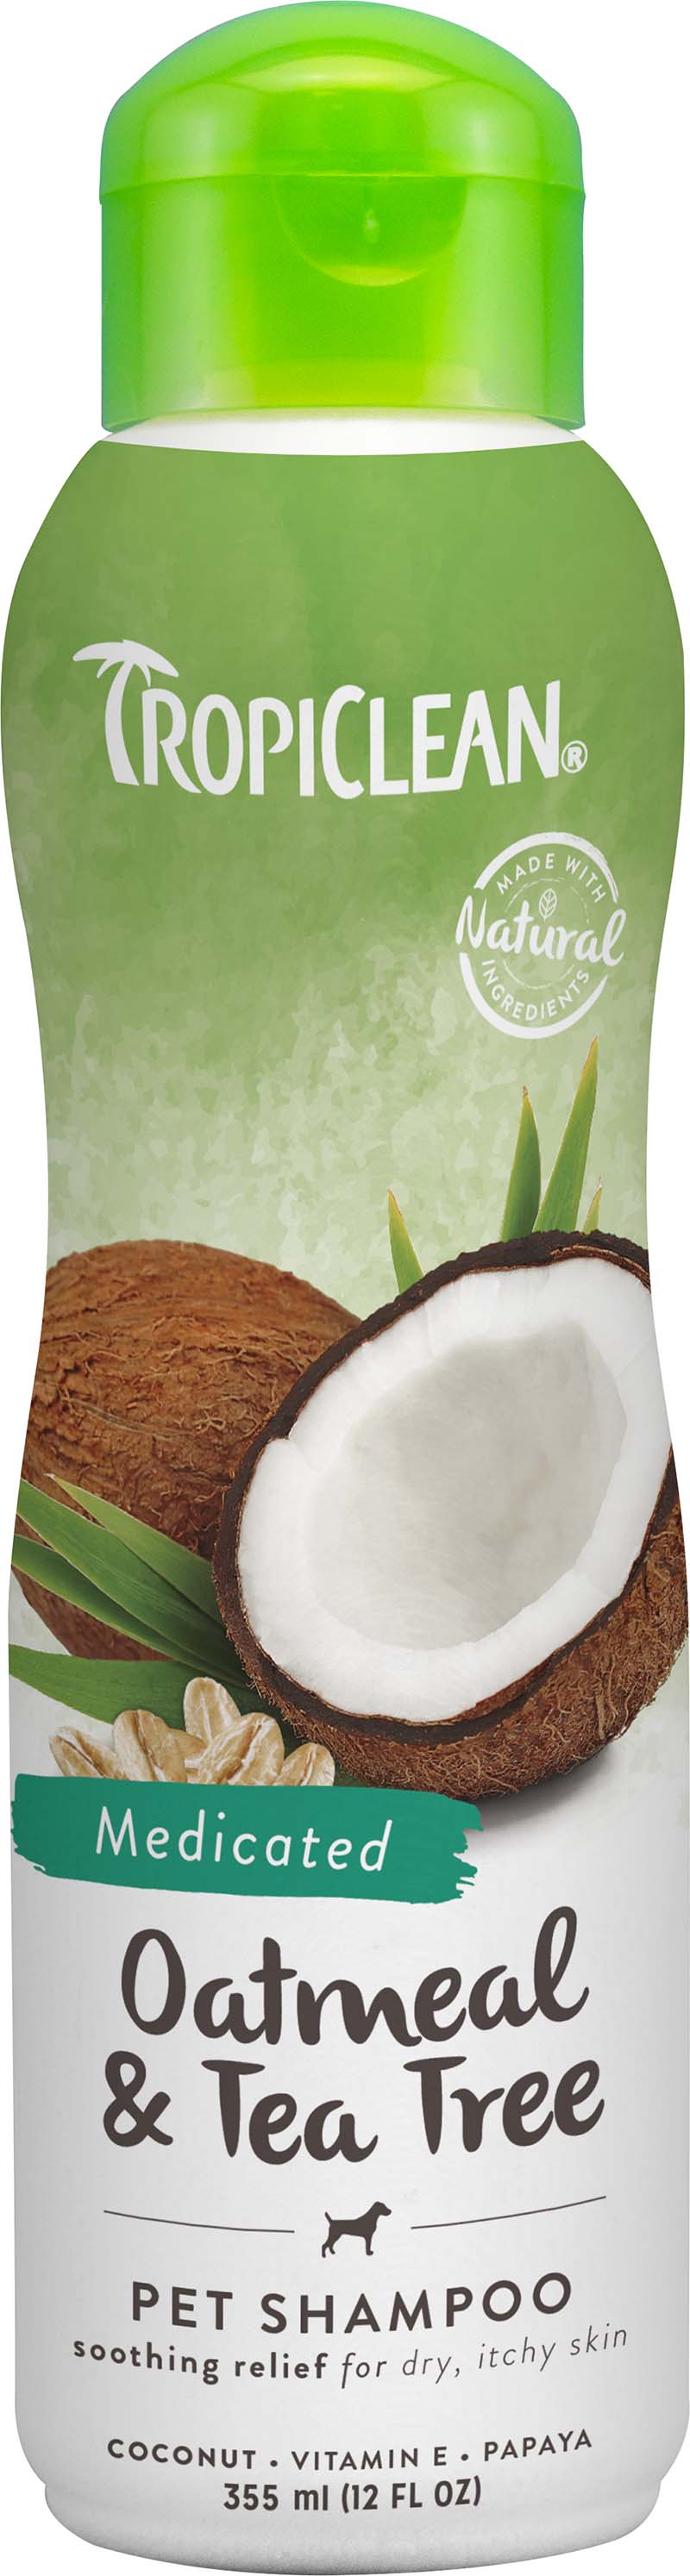 Tropiclean - oatmeal&tea tree shampoo - 355ml (719.2108)